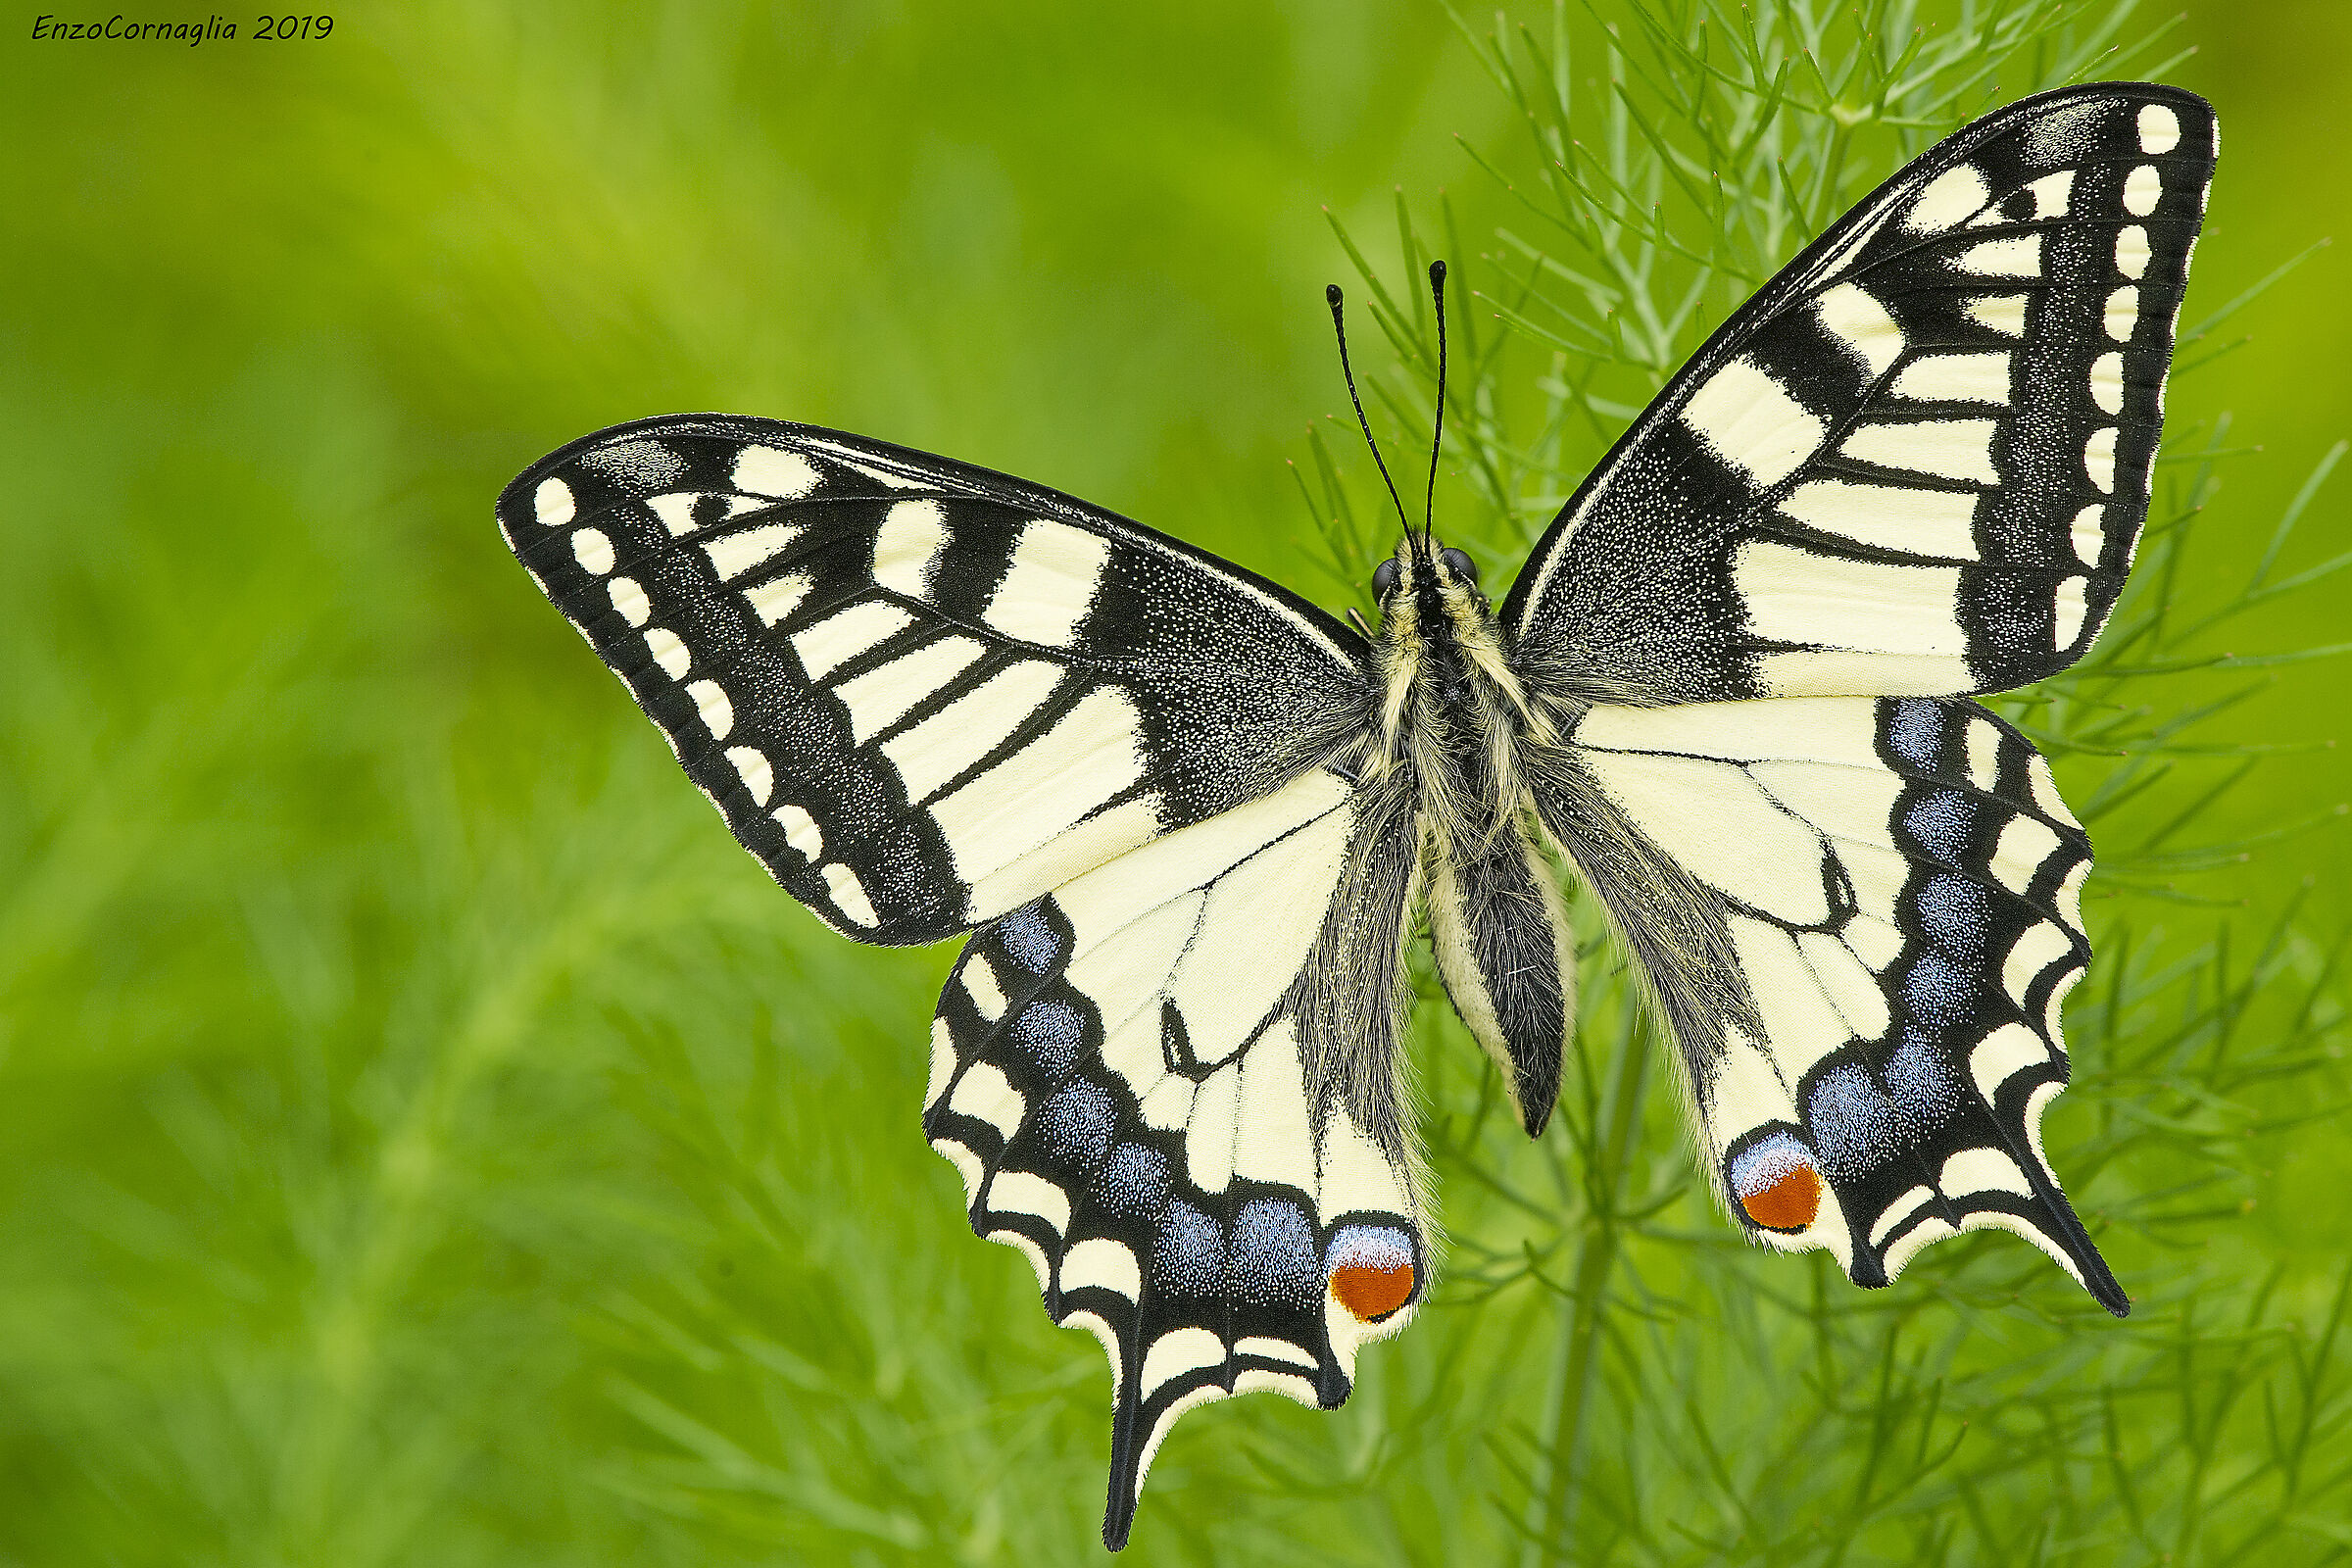 The Papilio Machaon...